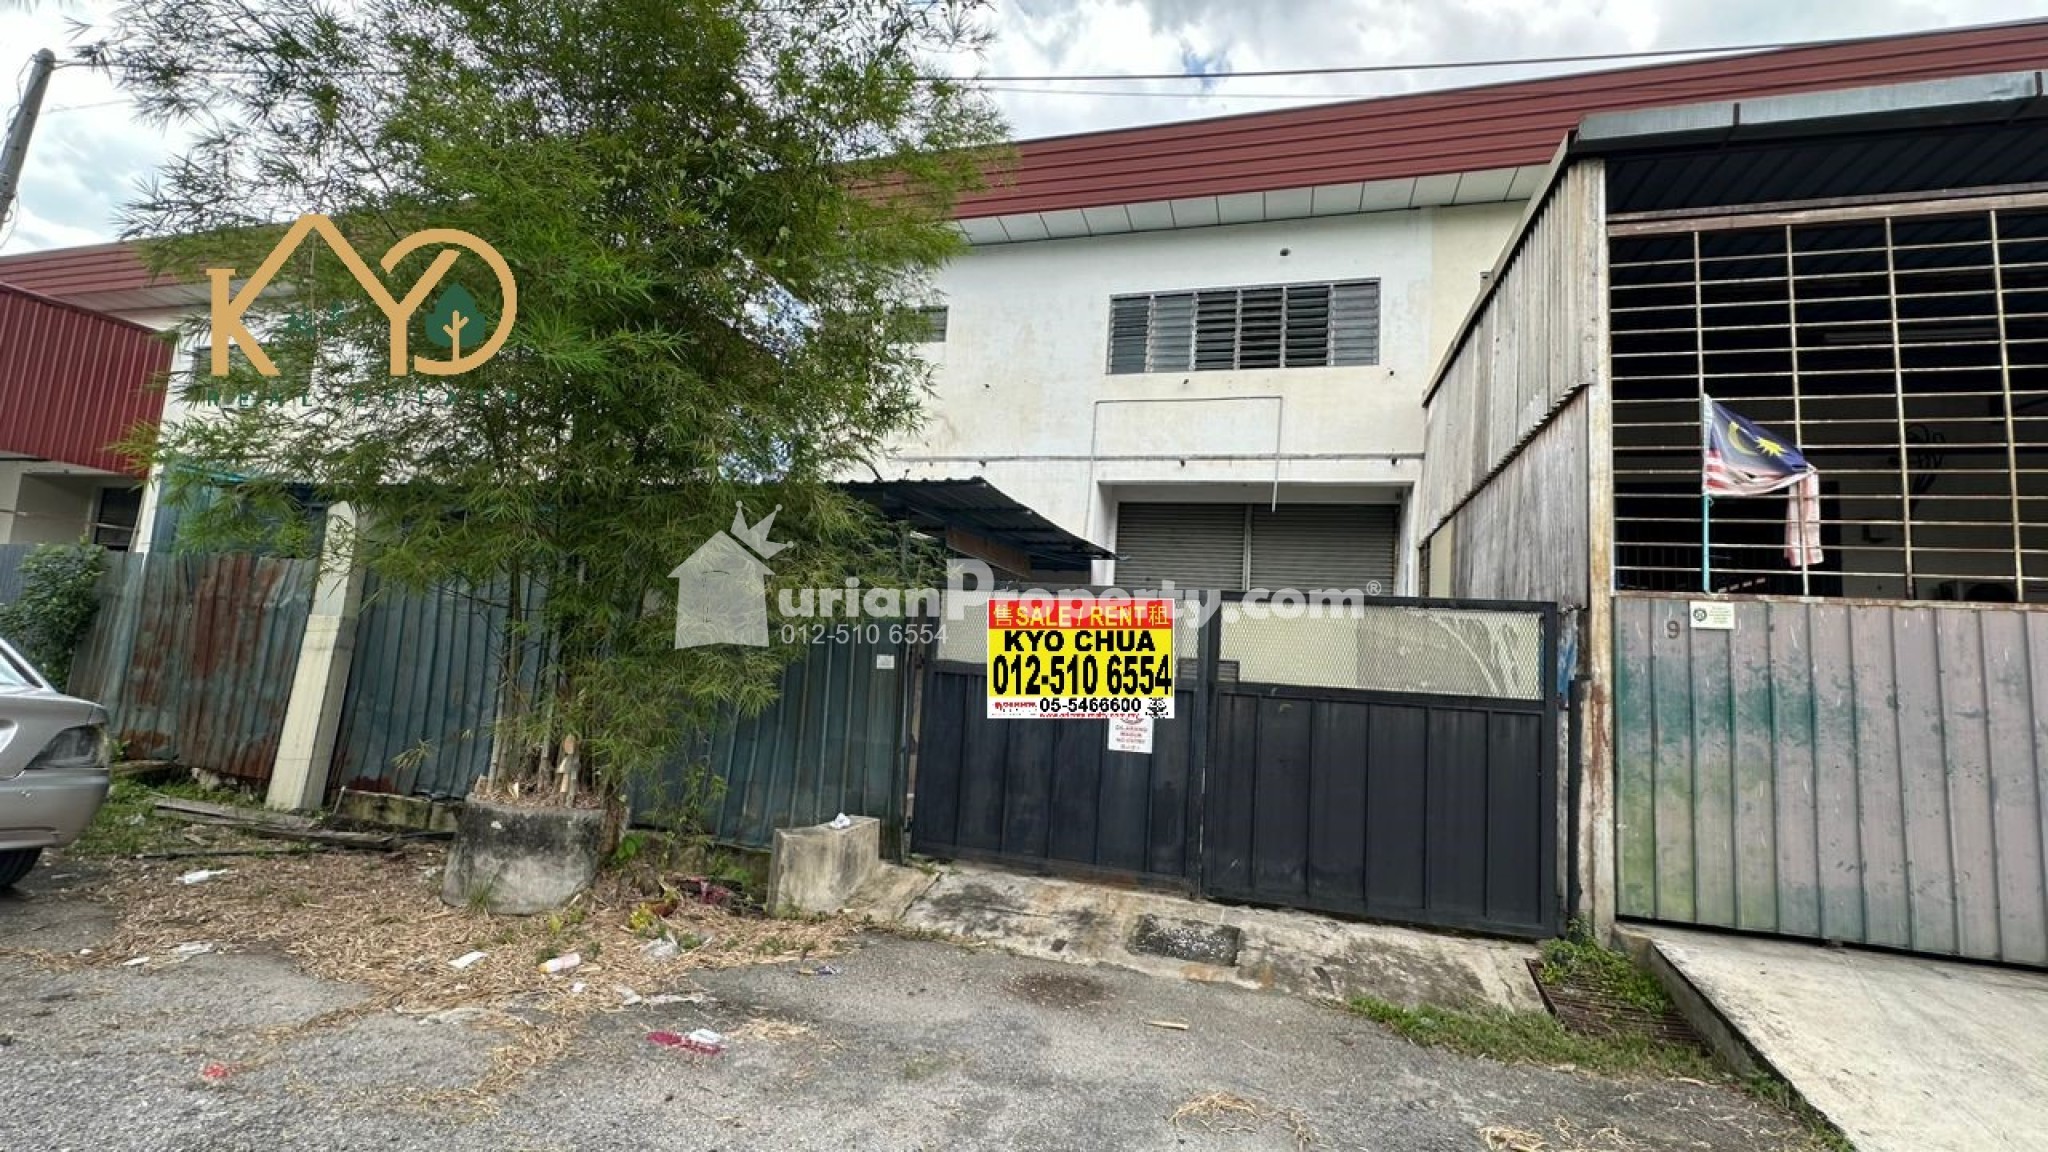 Detached Warehouse For Sale at Puncak Jelapang